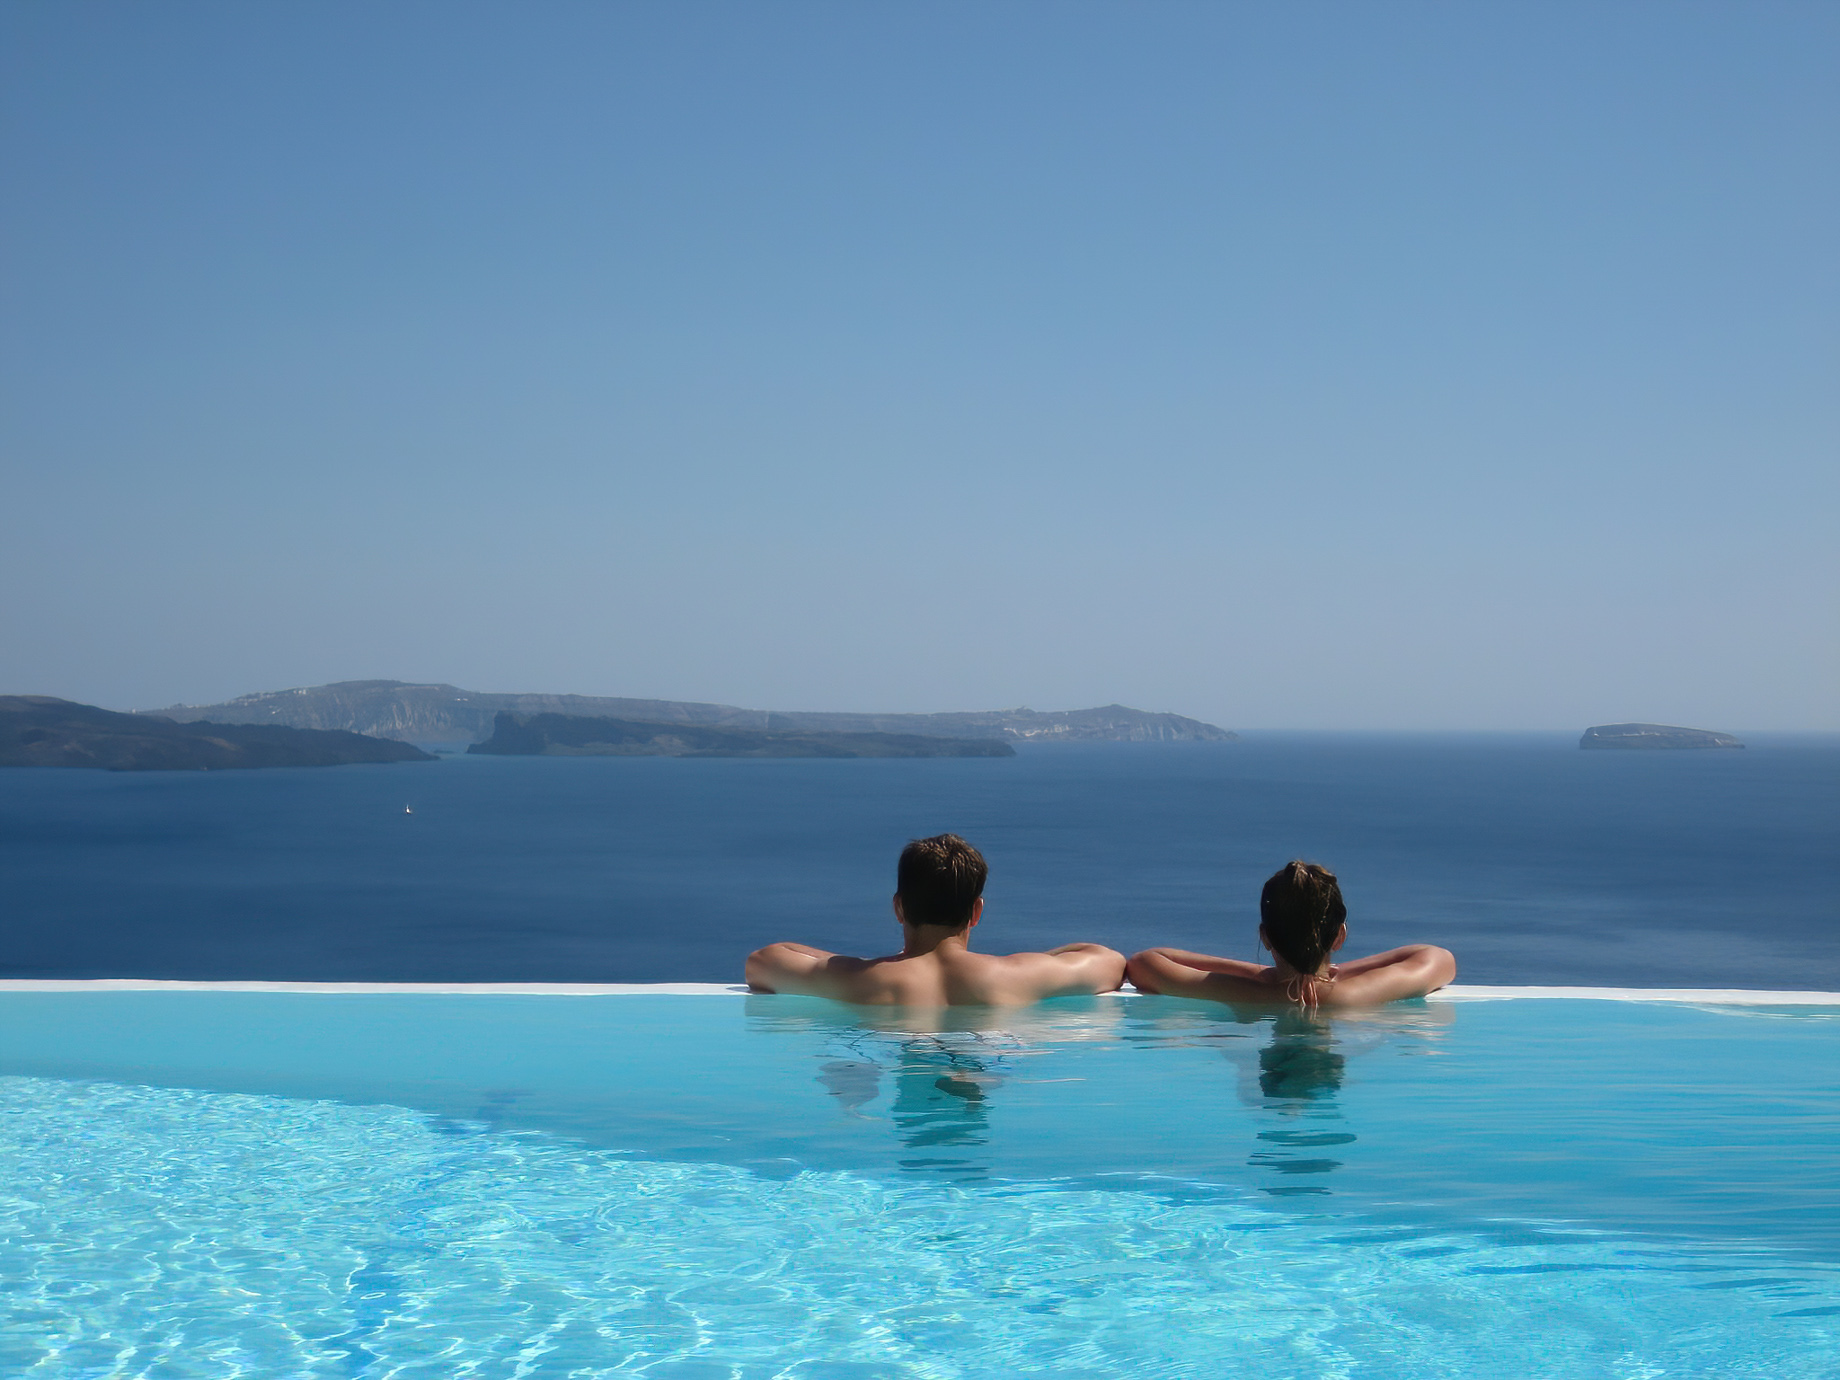 Mystique Hotel Santorini – Oia, Santorini Island, Greece – Clifftop Ocean View Infinity Pool